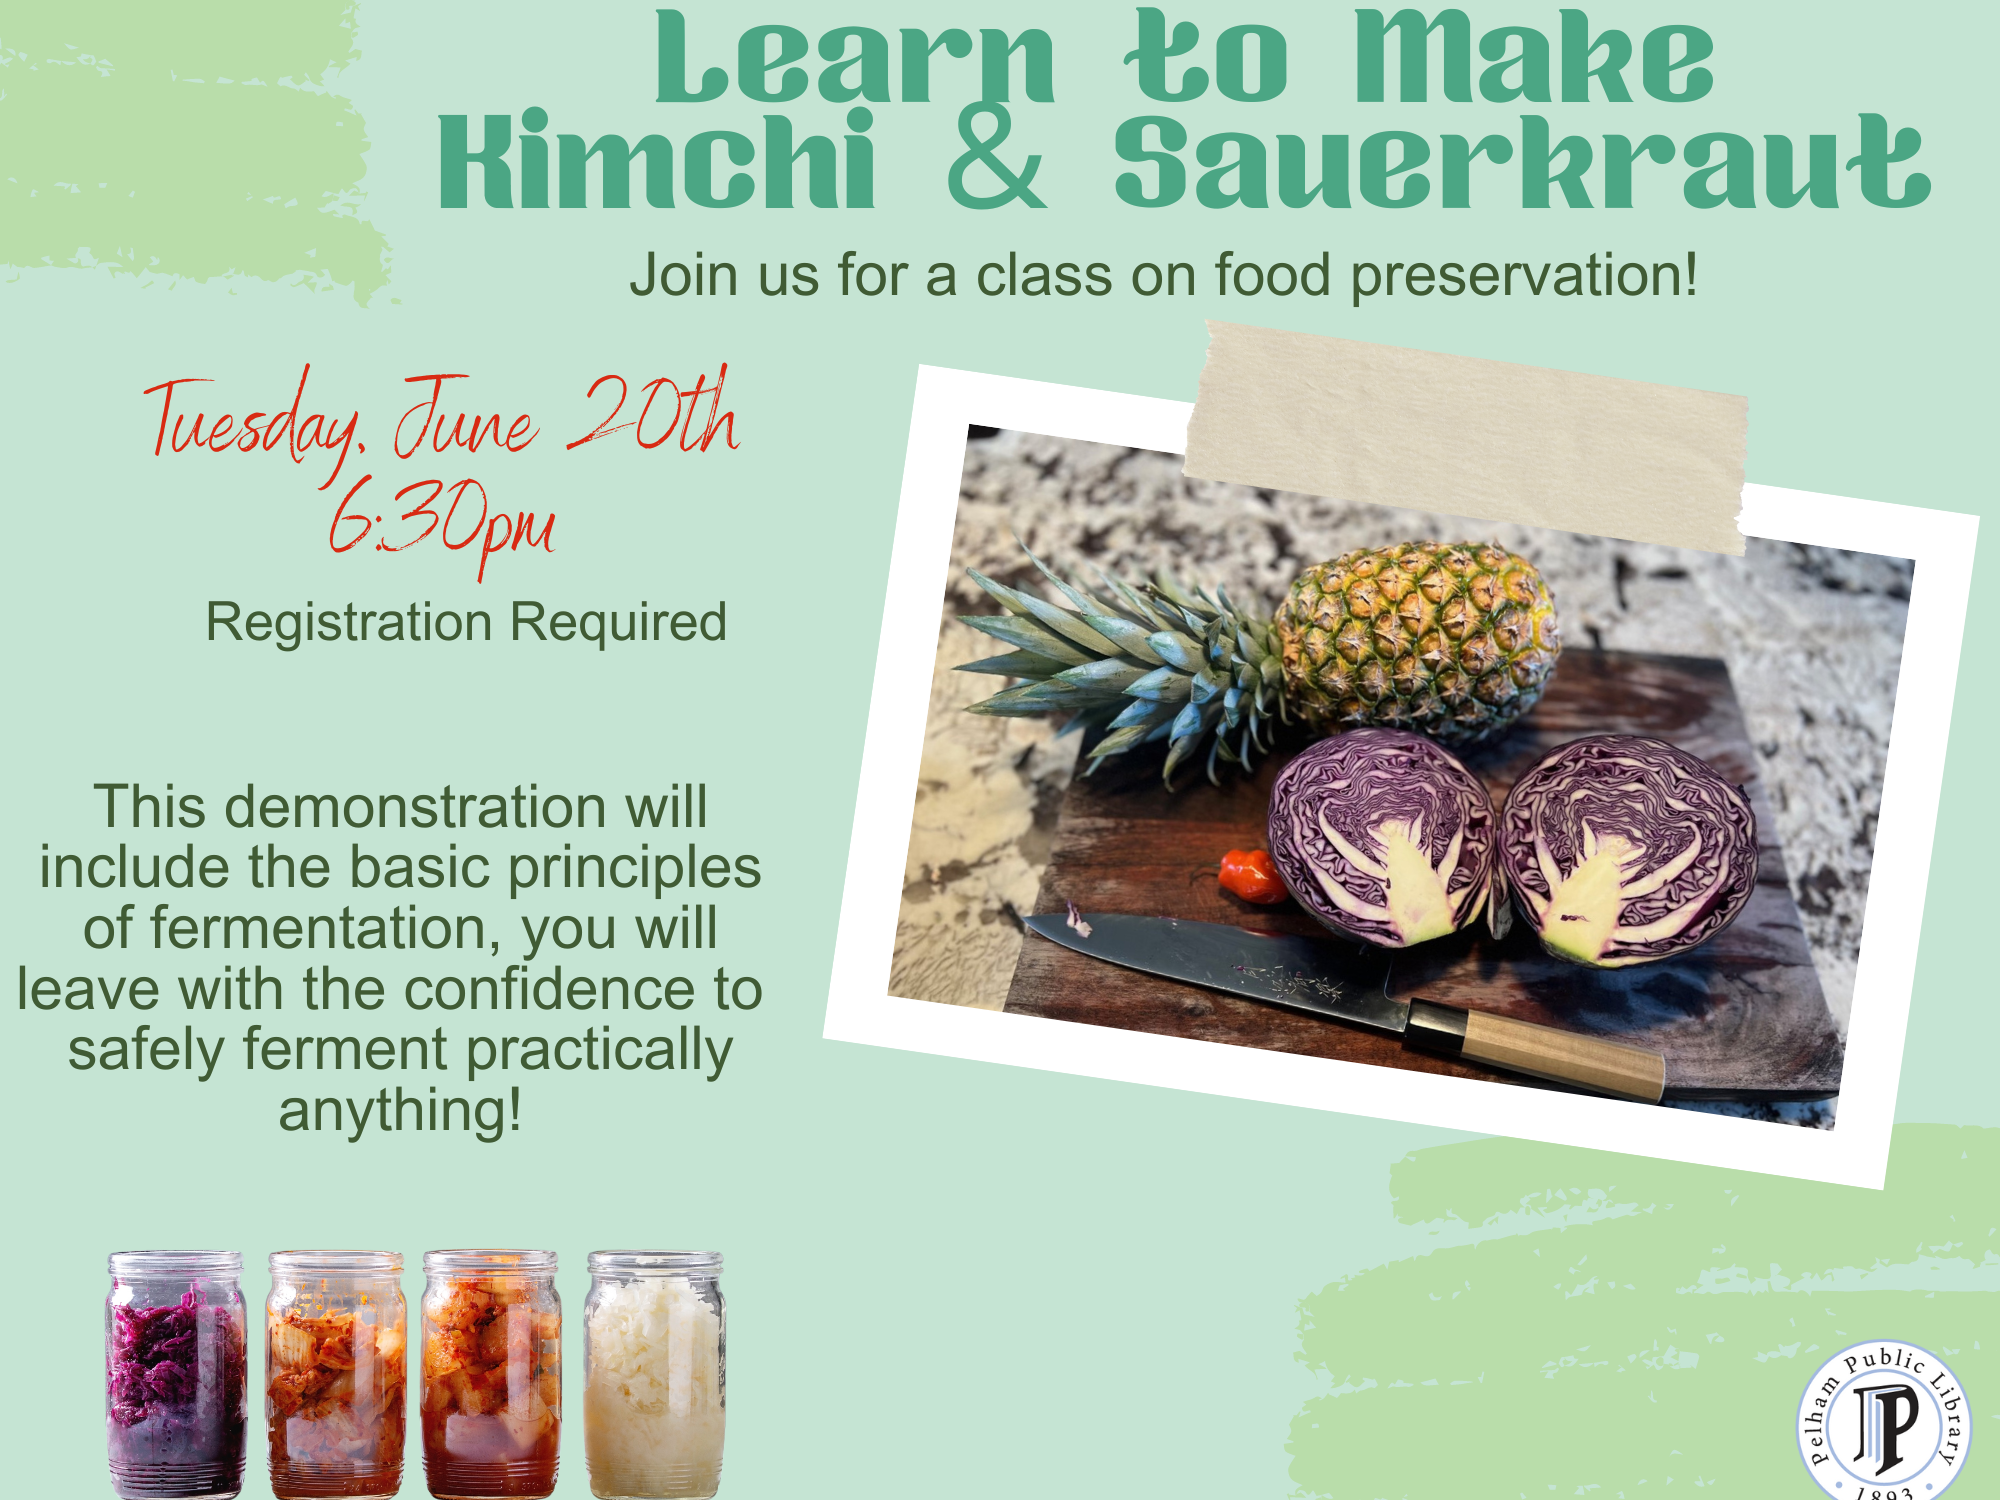 Learn to make Kimchi & Sauerkraut, June 20th, 6:30pm